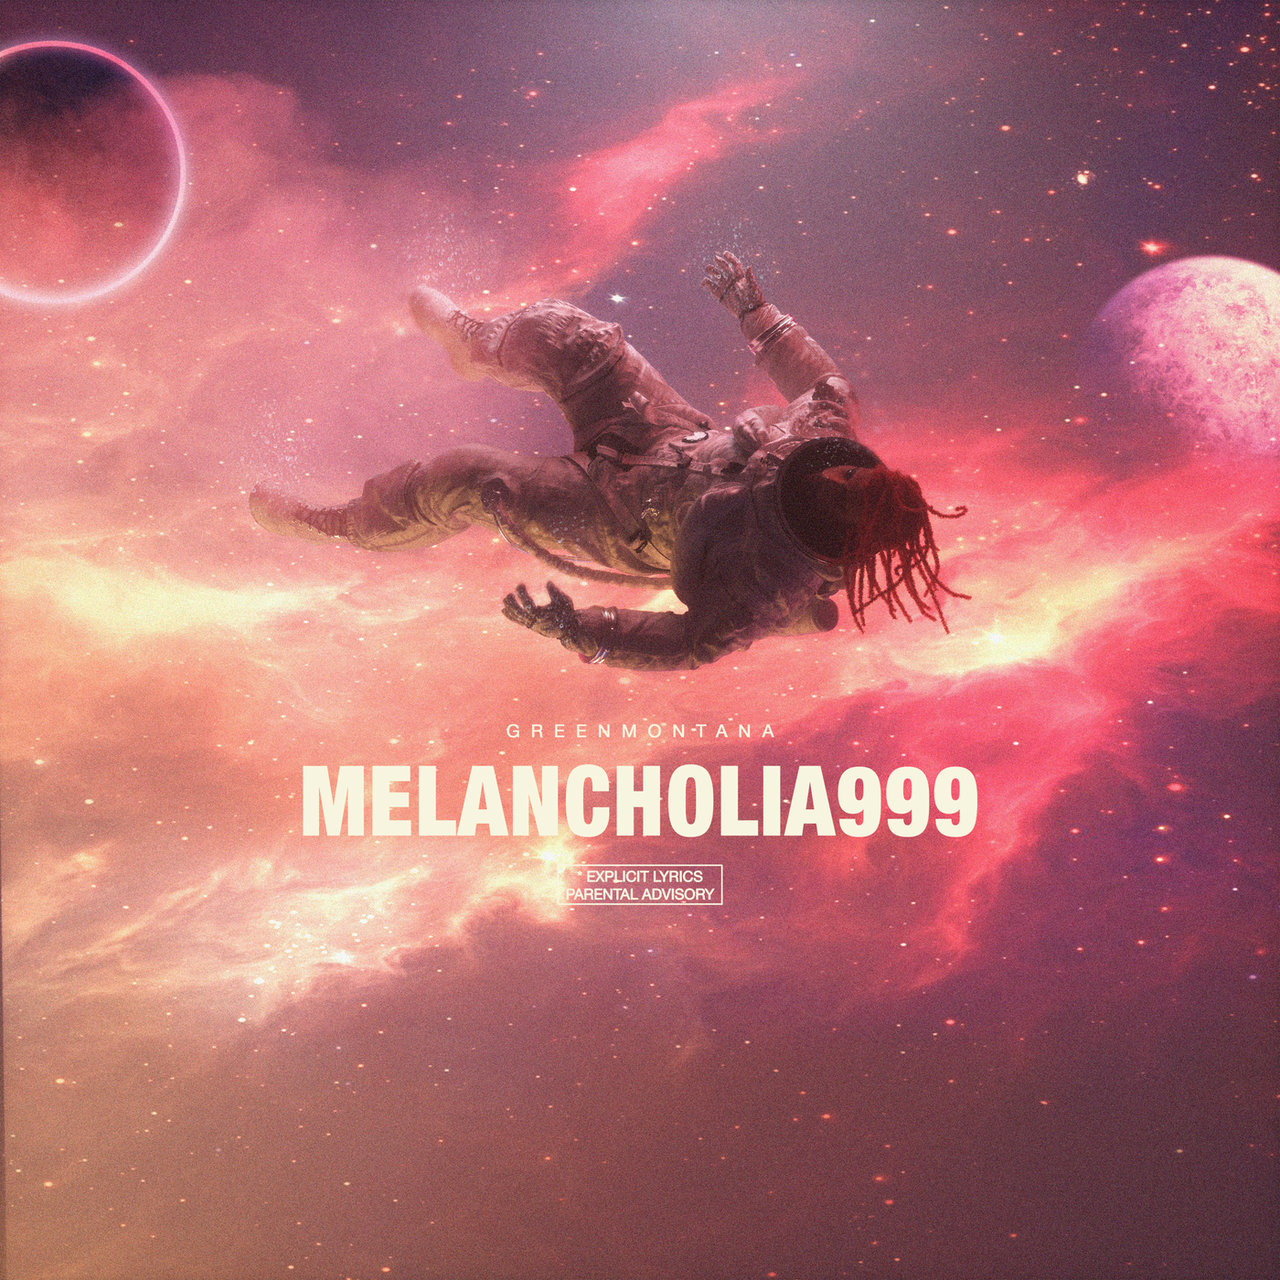 Green Montana - Melancholia 999 (Cover)